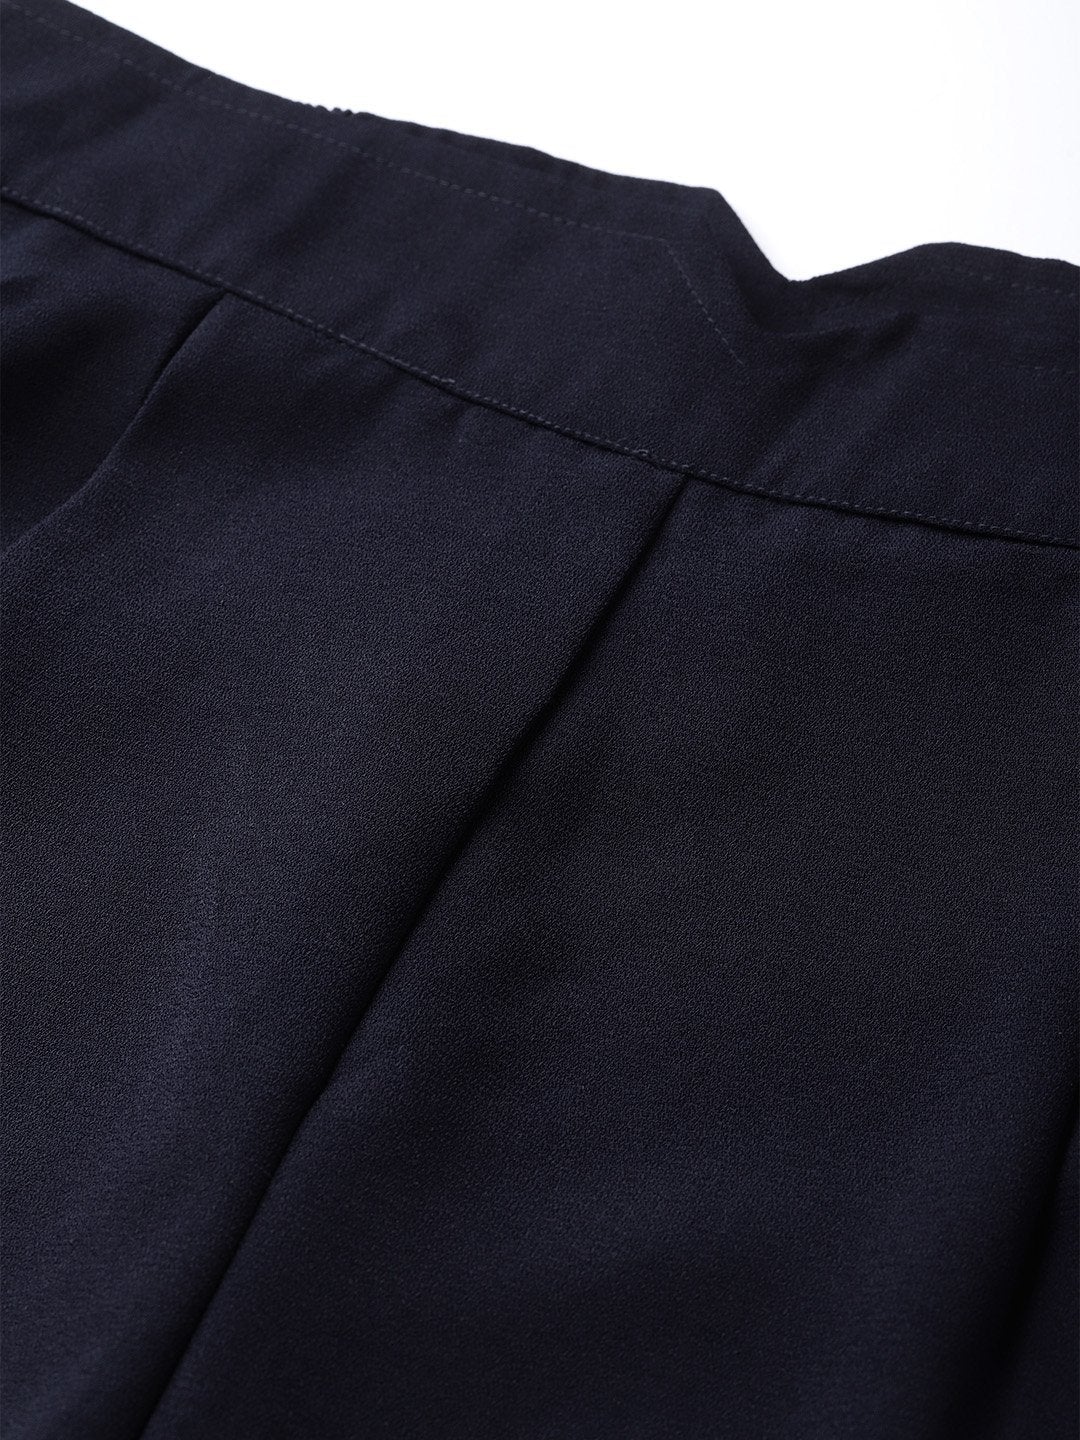 Women's Navy Side Zipper Pant - SASSAFRAS